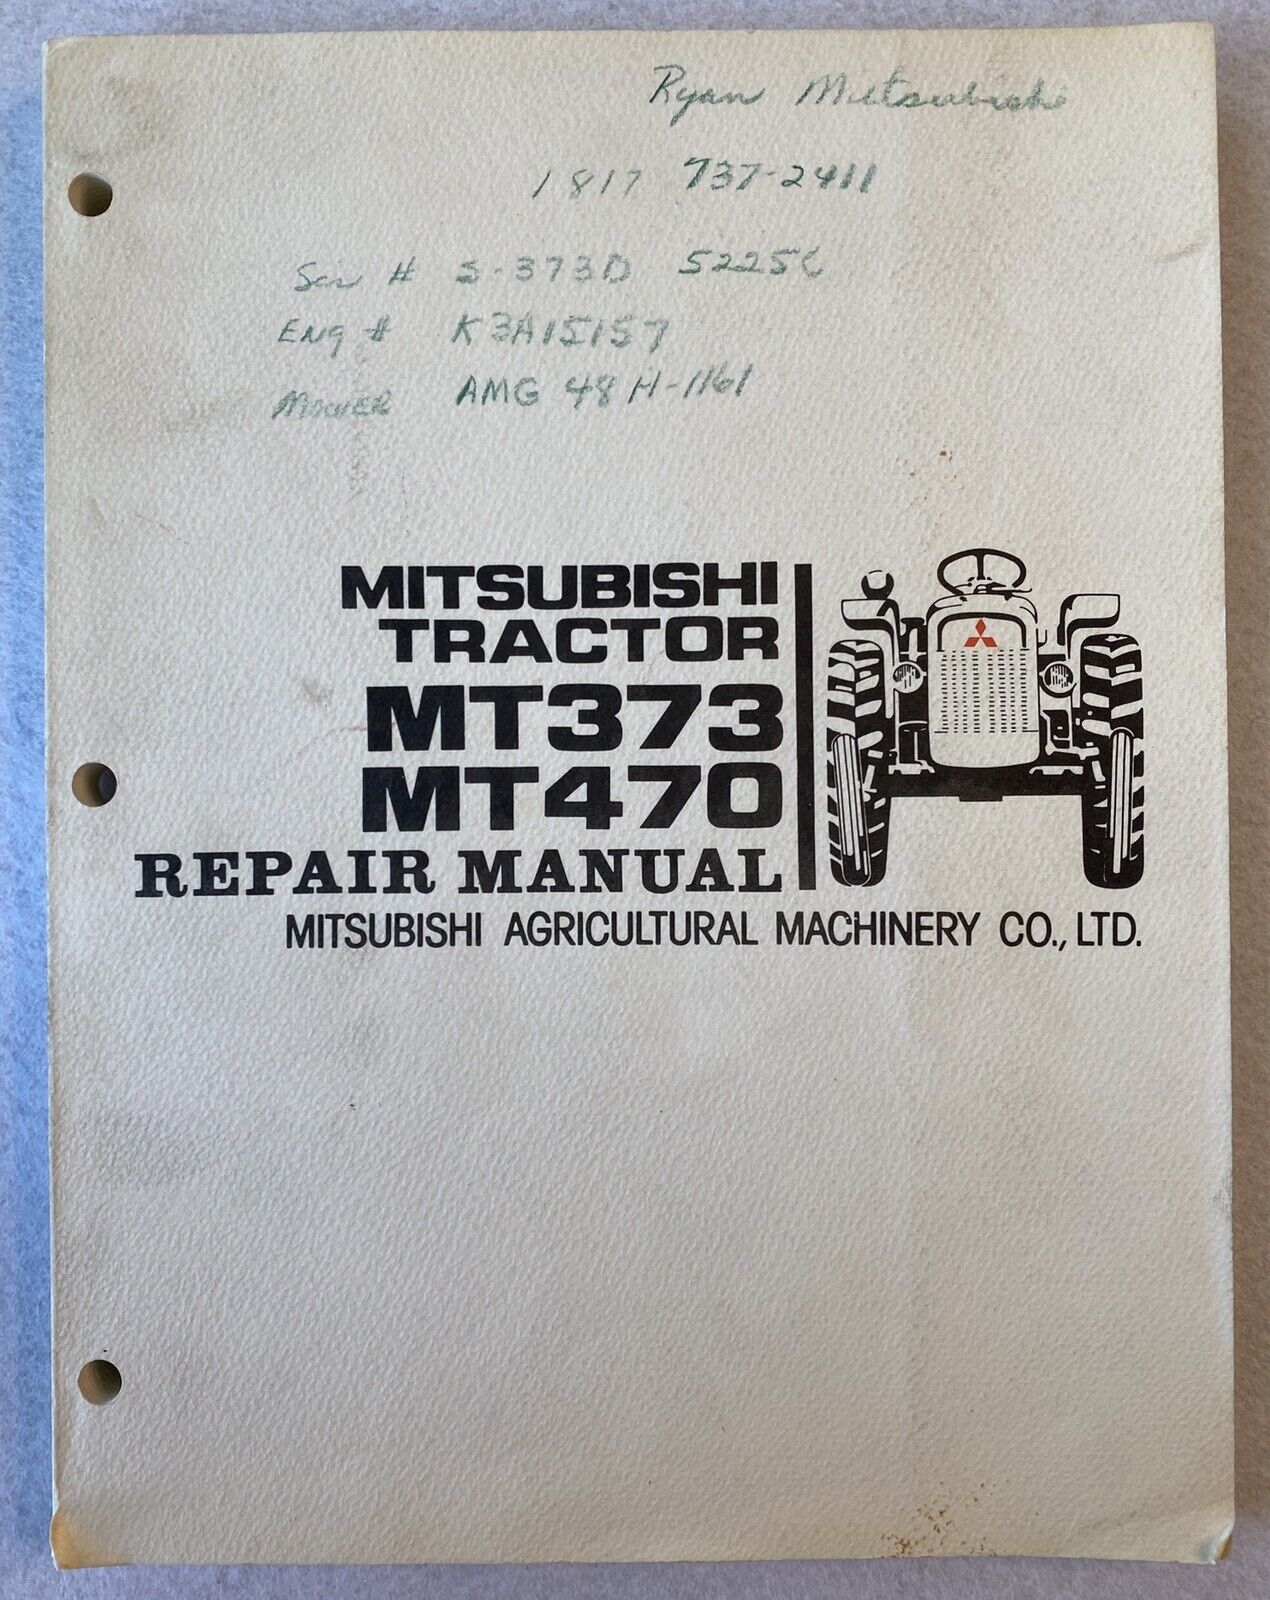 Mitsubishi Tractor Repair Manual MT373 MT470 Service Maintenance 1970s Vtg